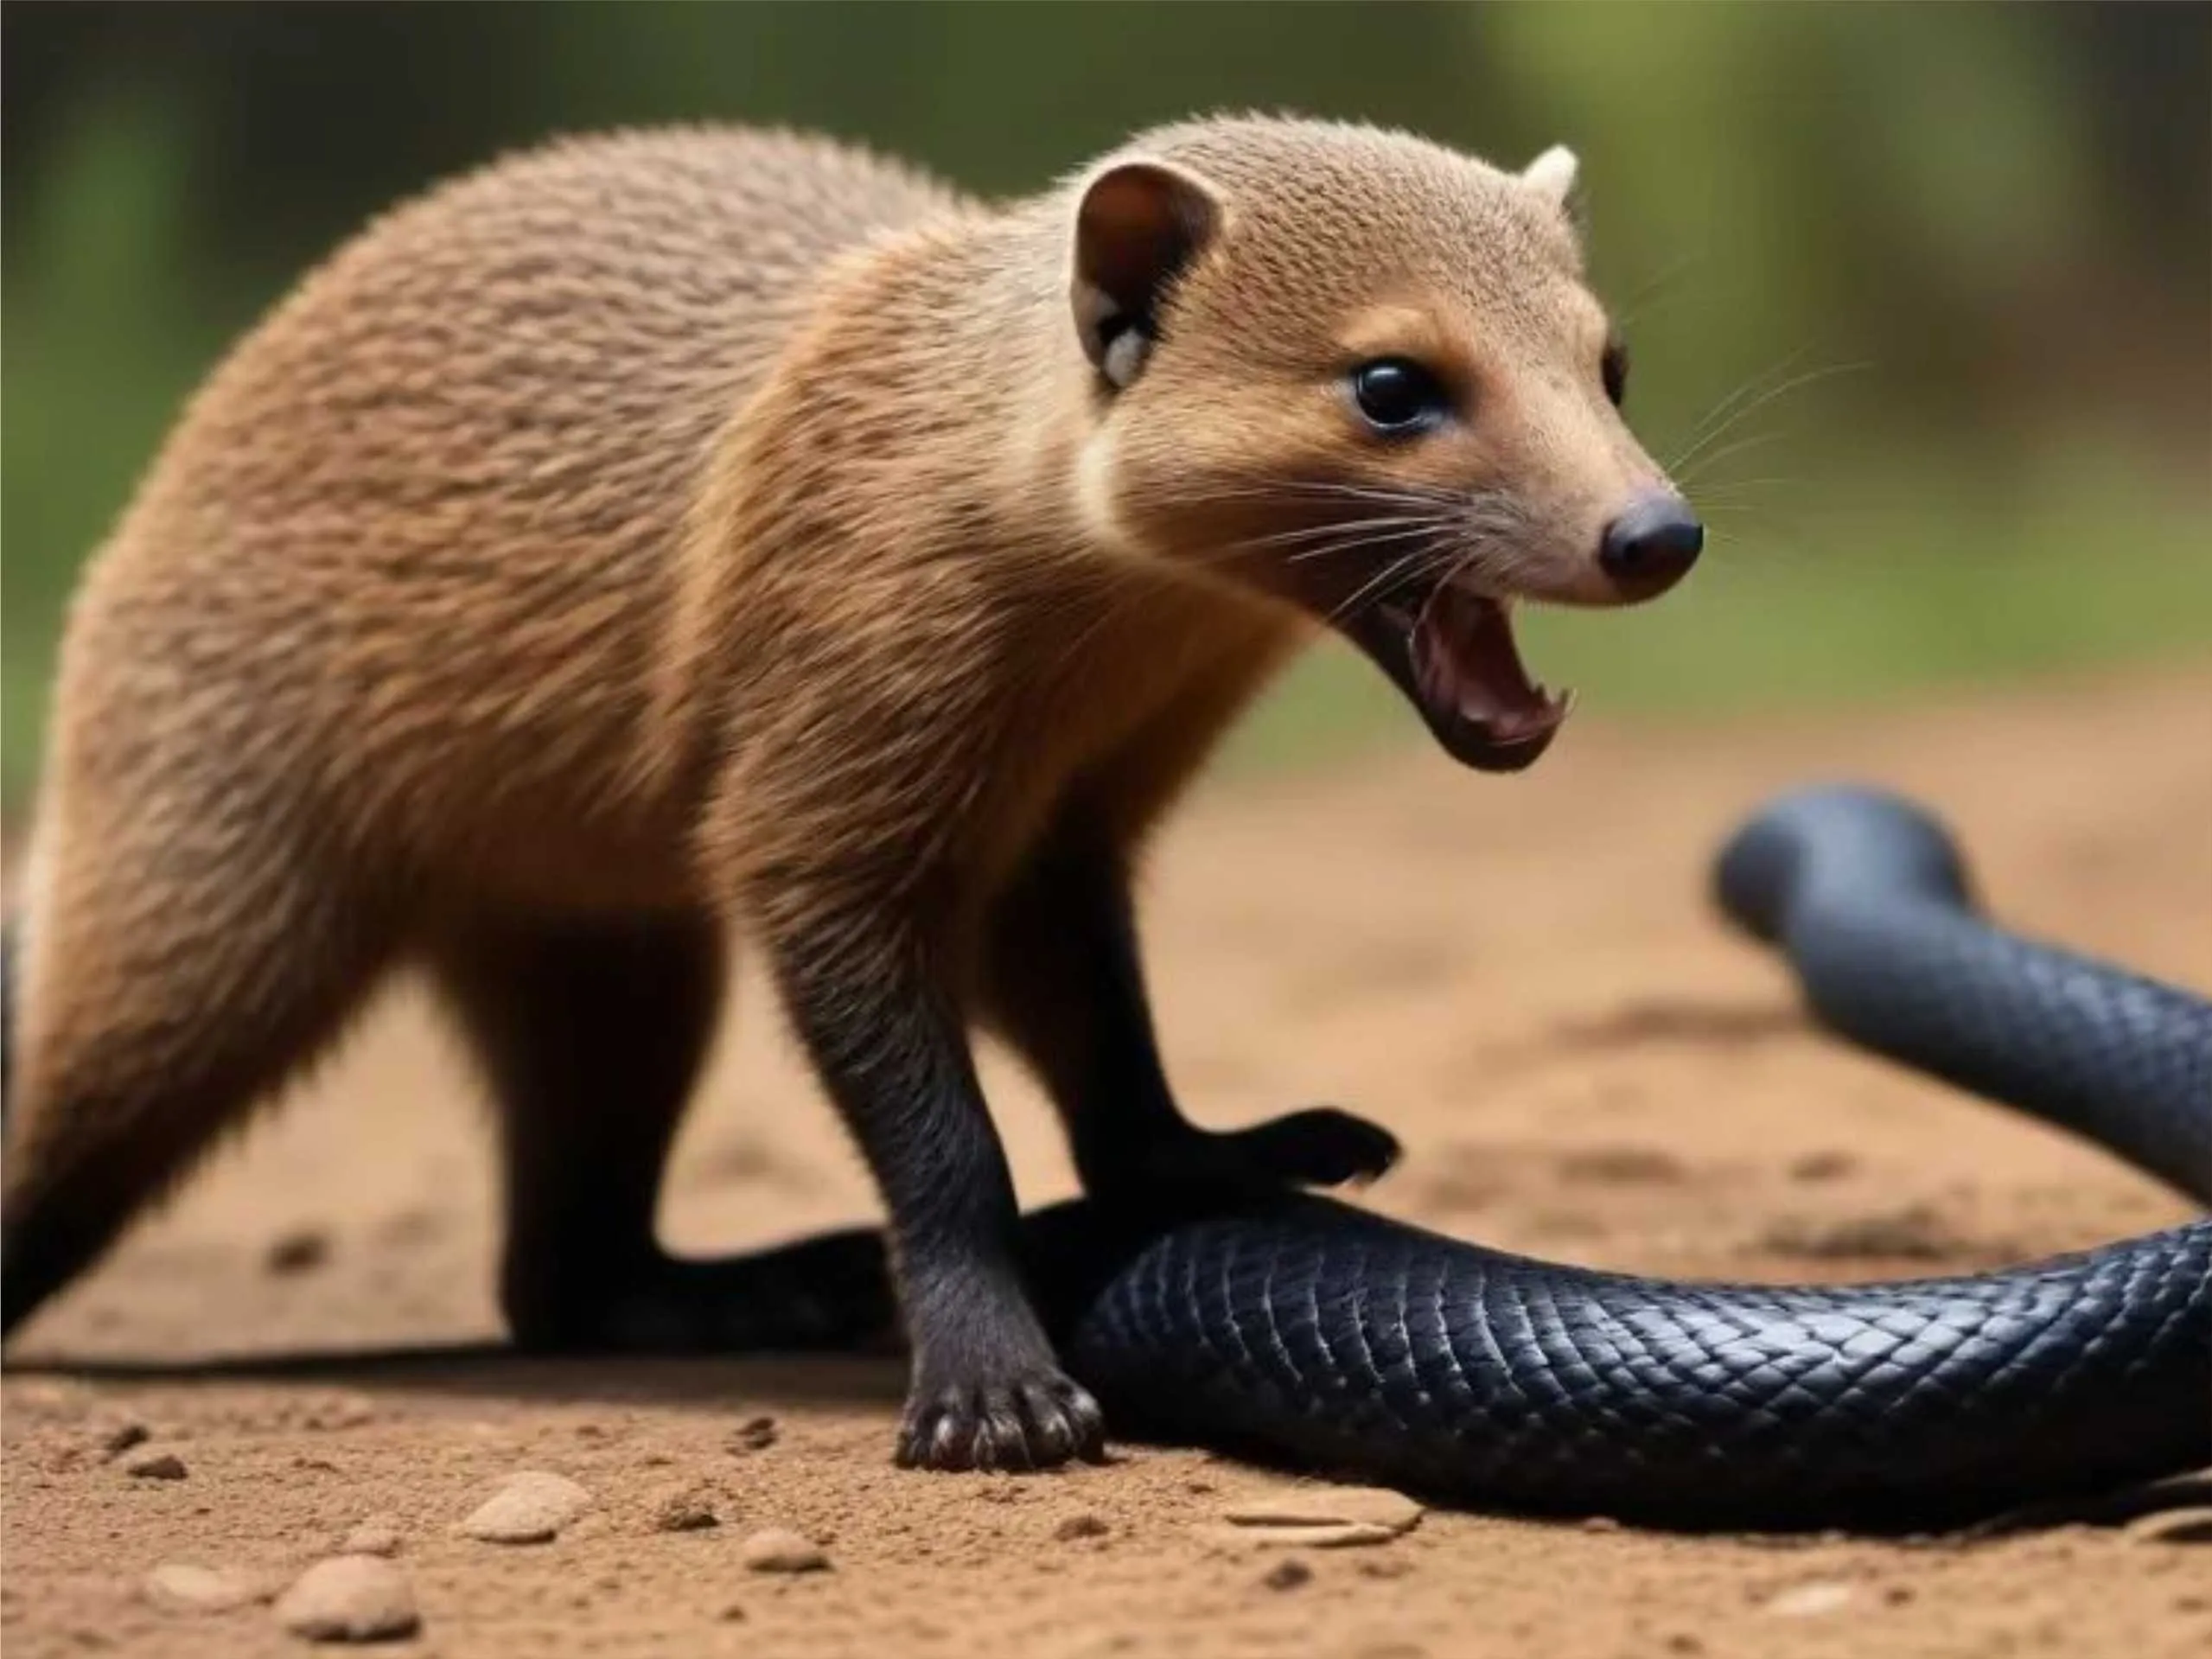 mongoose and snake fighting cartoon image